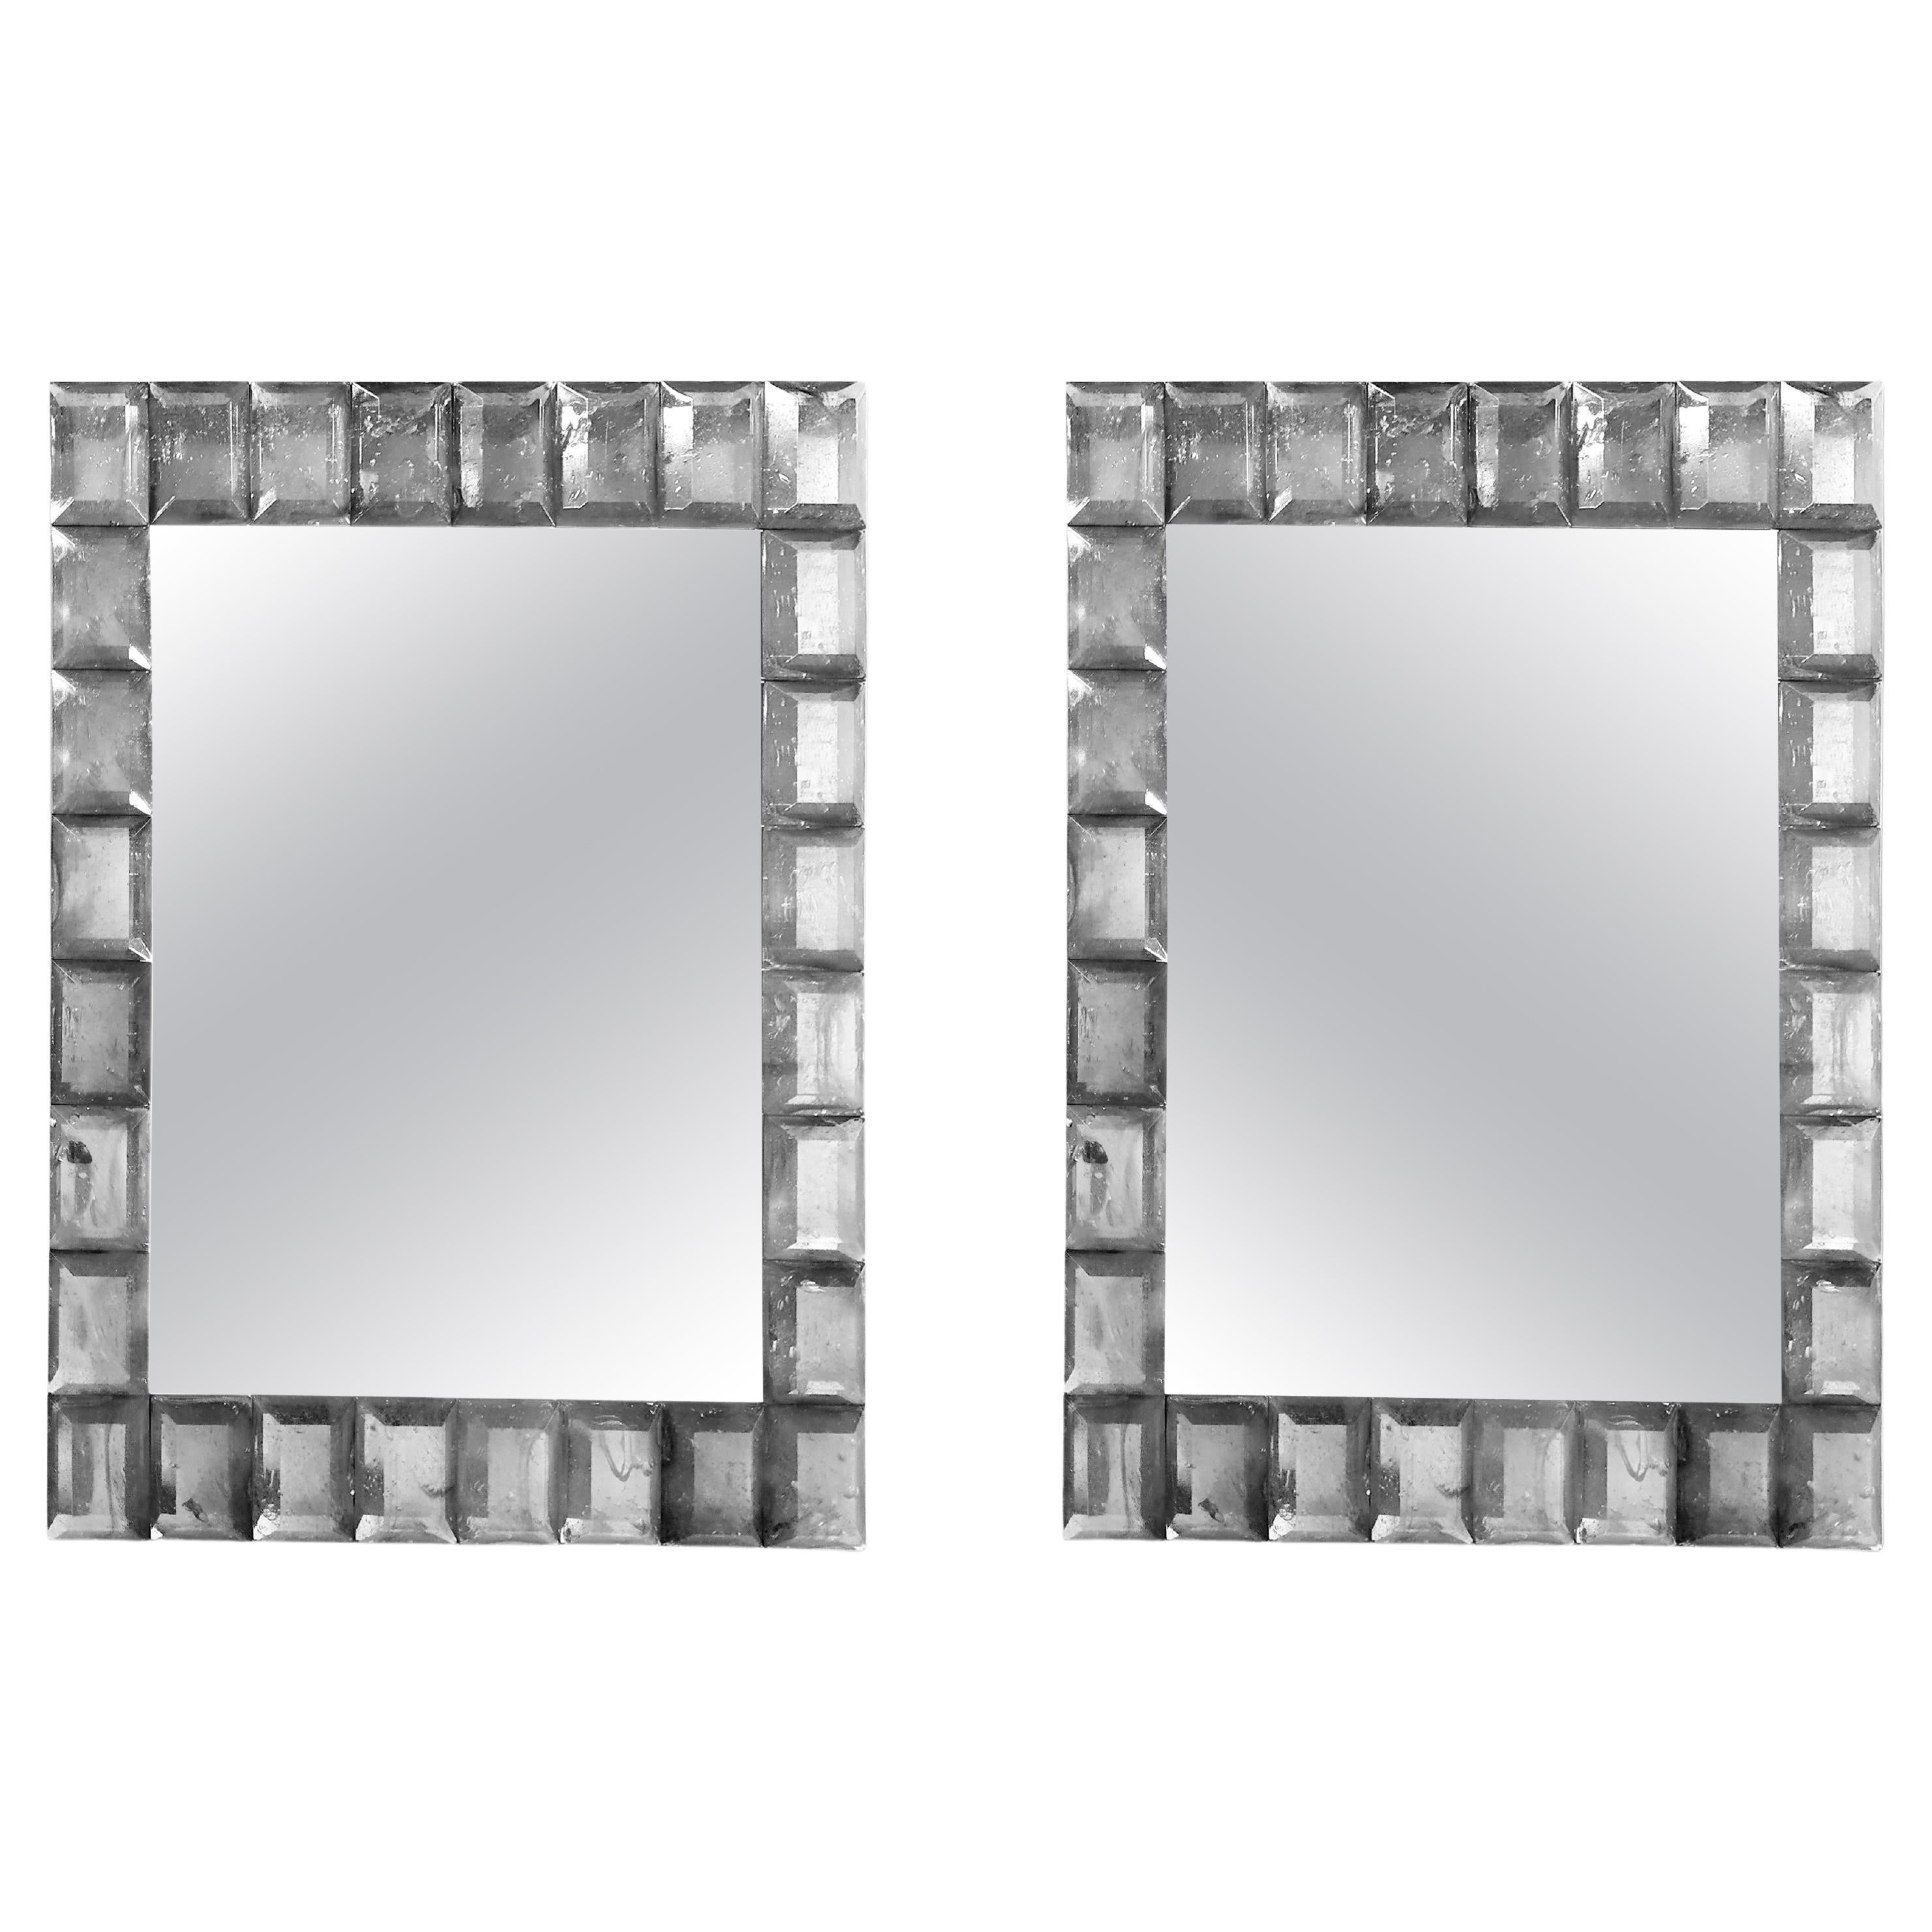 "Silver" Murano Glass Mirror in Contemporary Style by Fratelli Tosi Murano For Sale